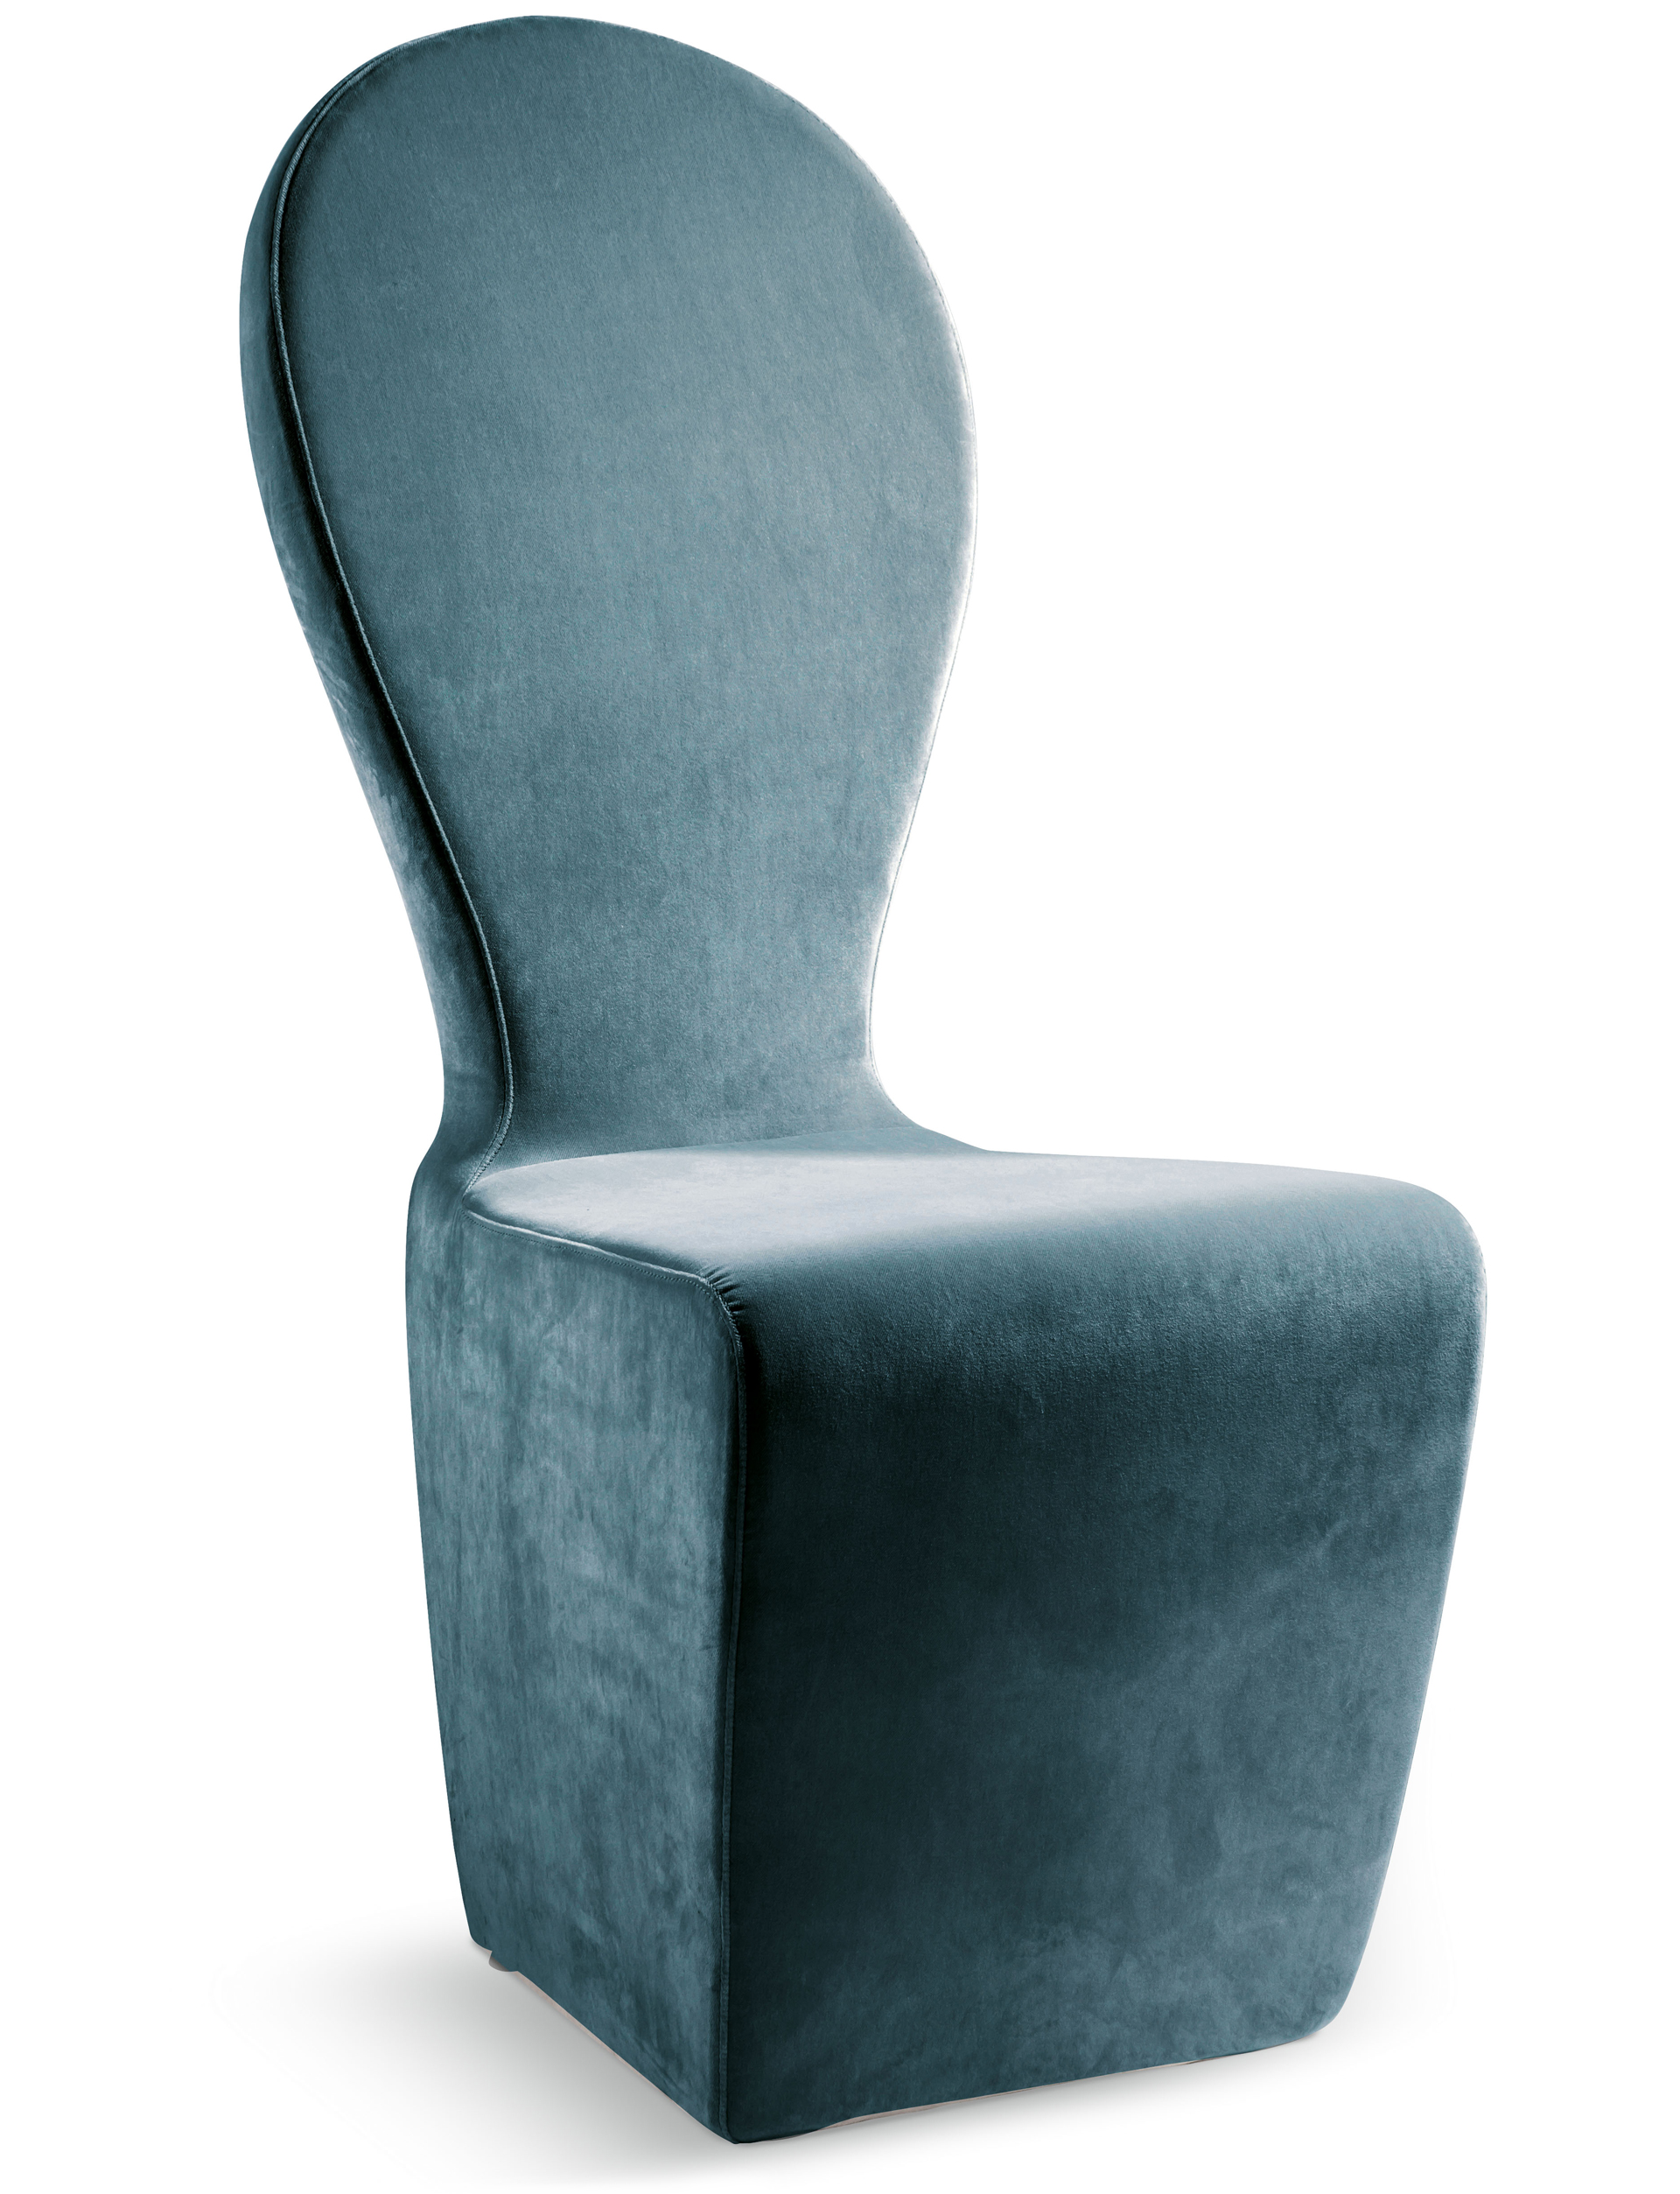 3168_mondrian-chair-143-bellagio-night